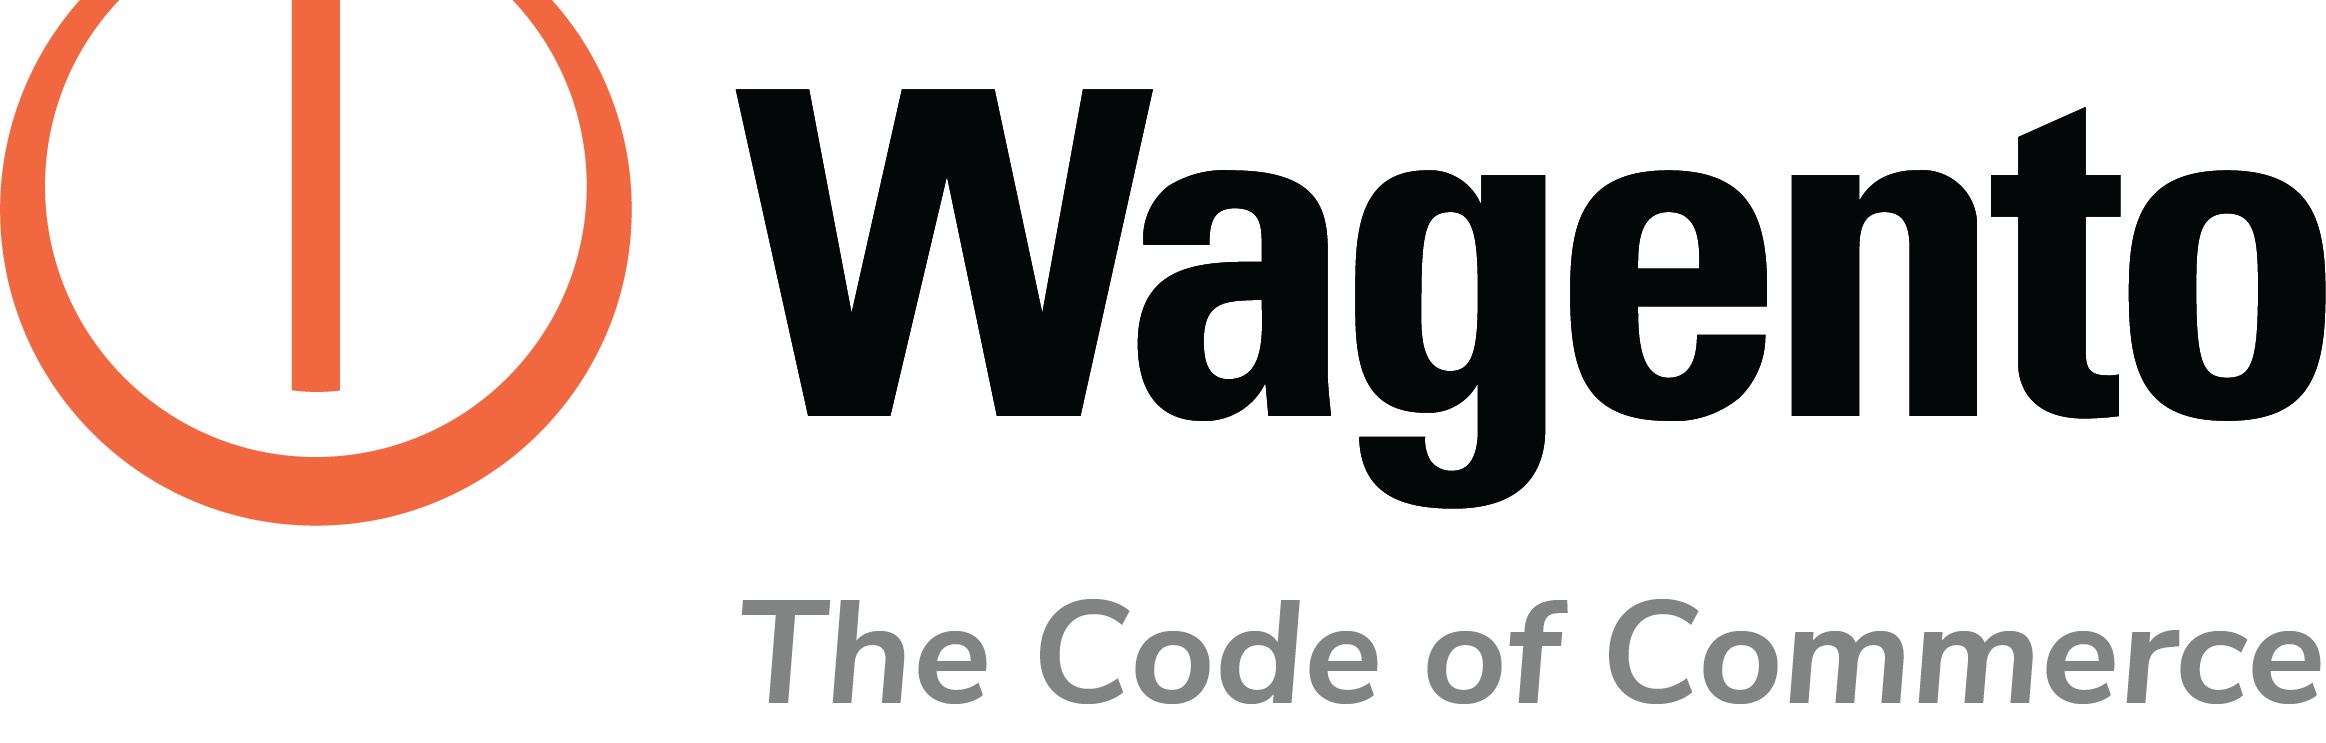 Wagento Logo